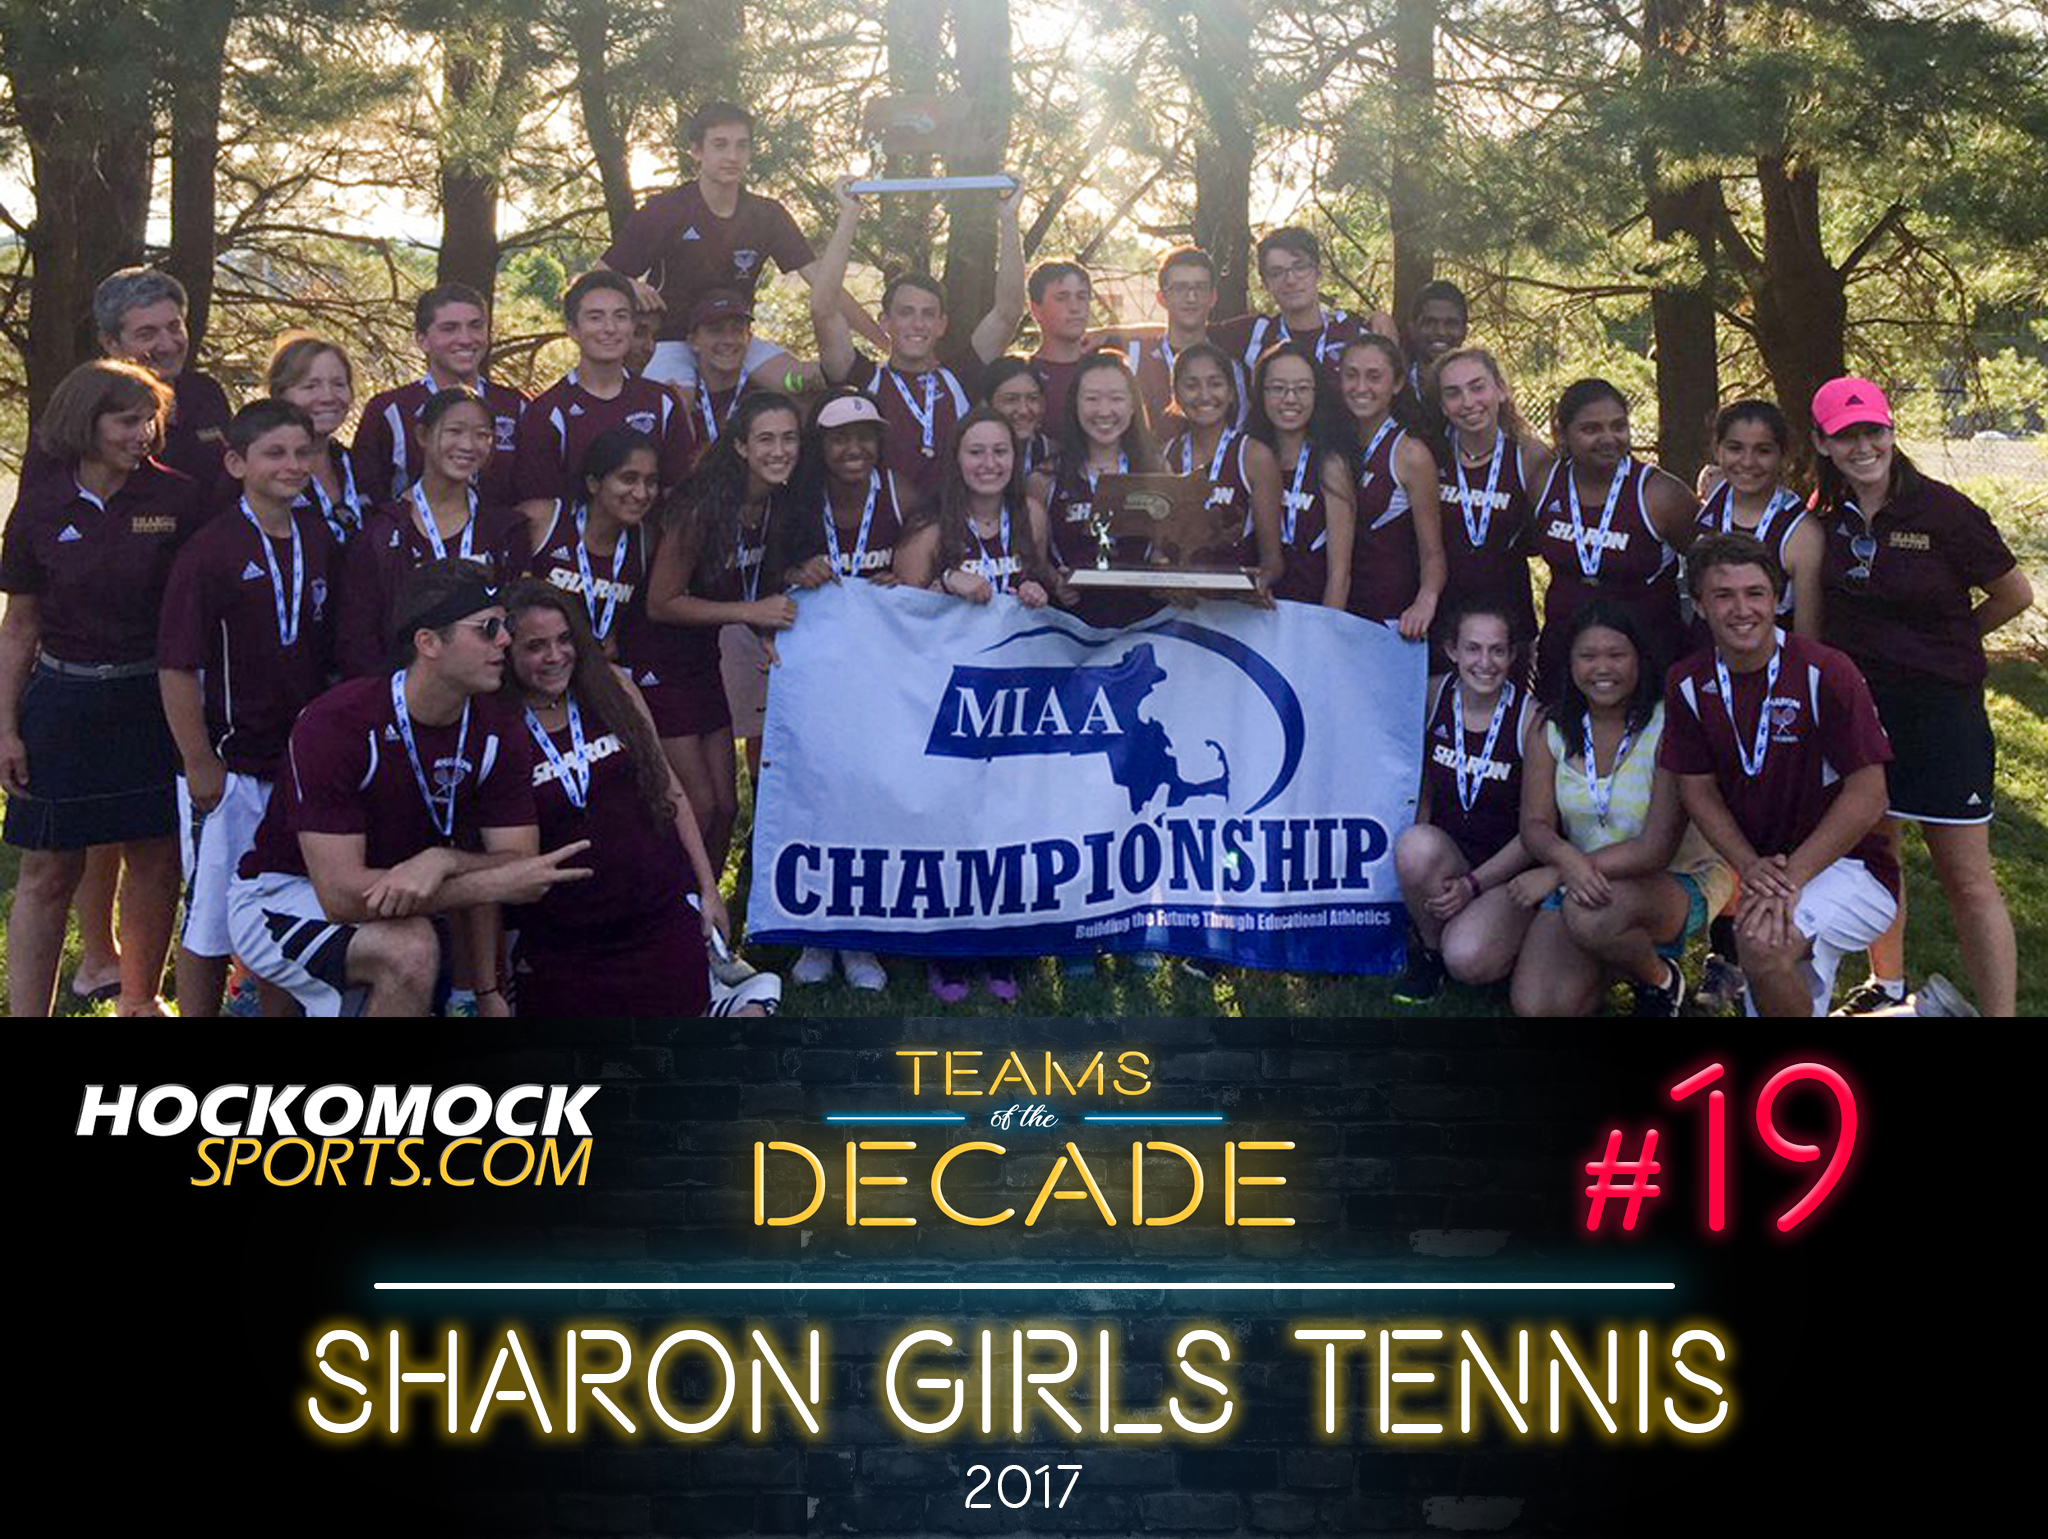 Sharon girls tennis